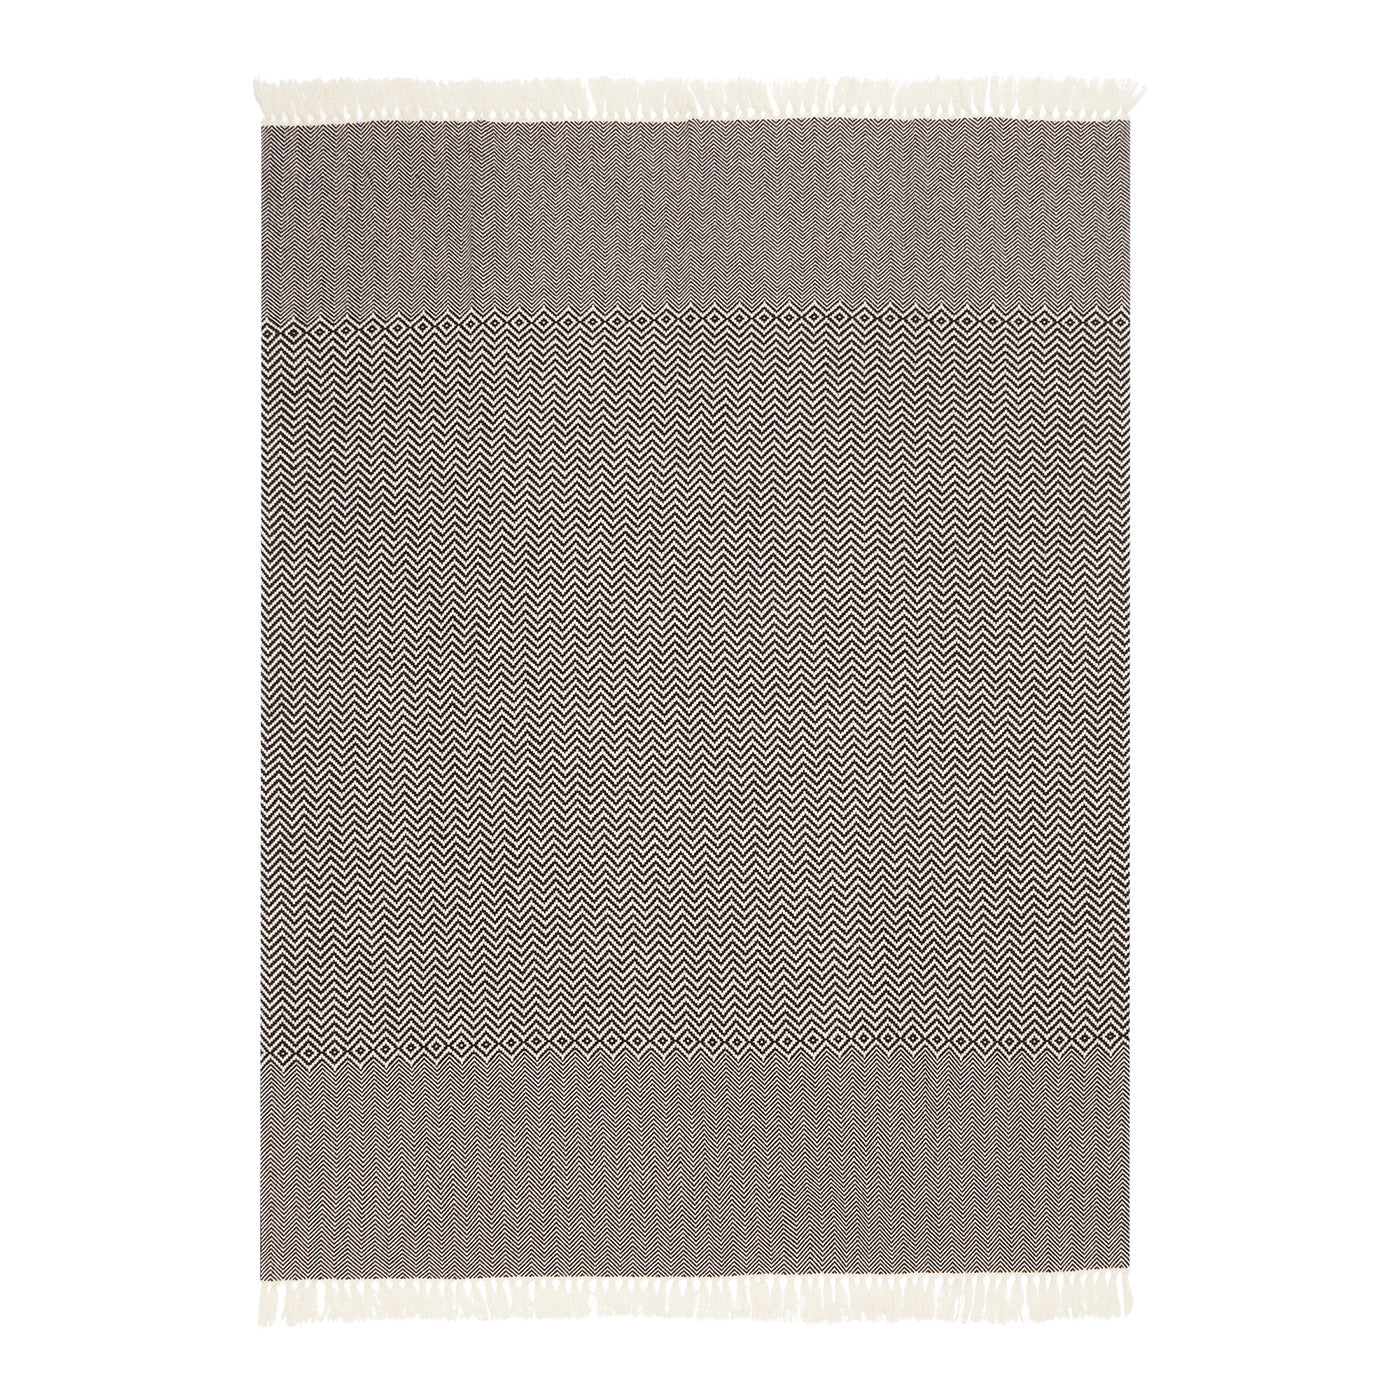 Vigo Herringbone Black-And-White Small Blanket - Alternative view 1